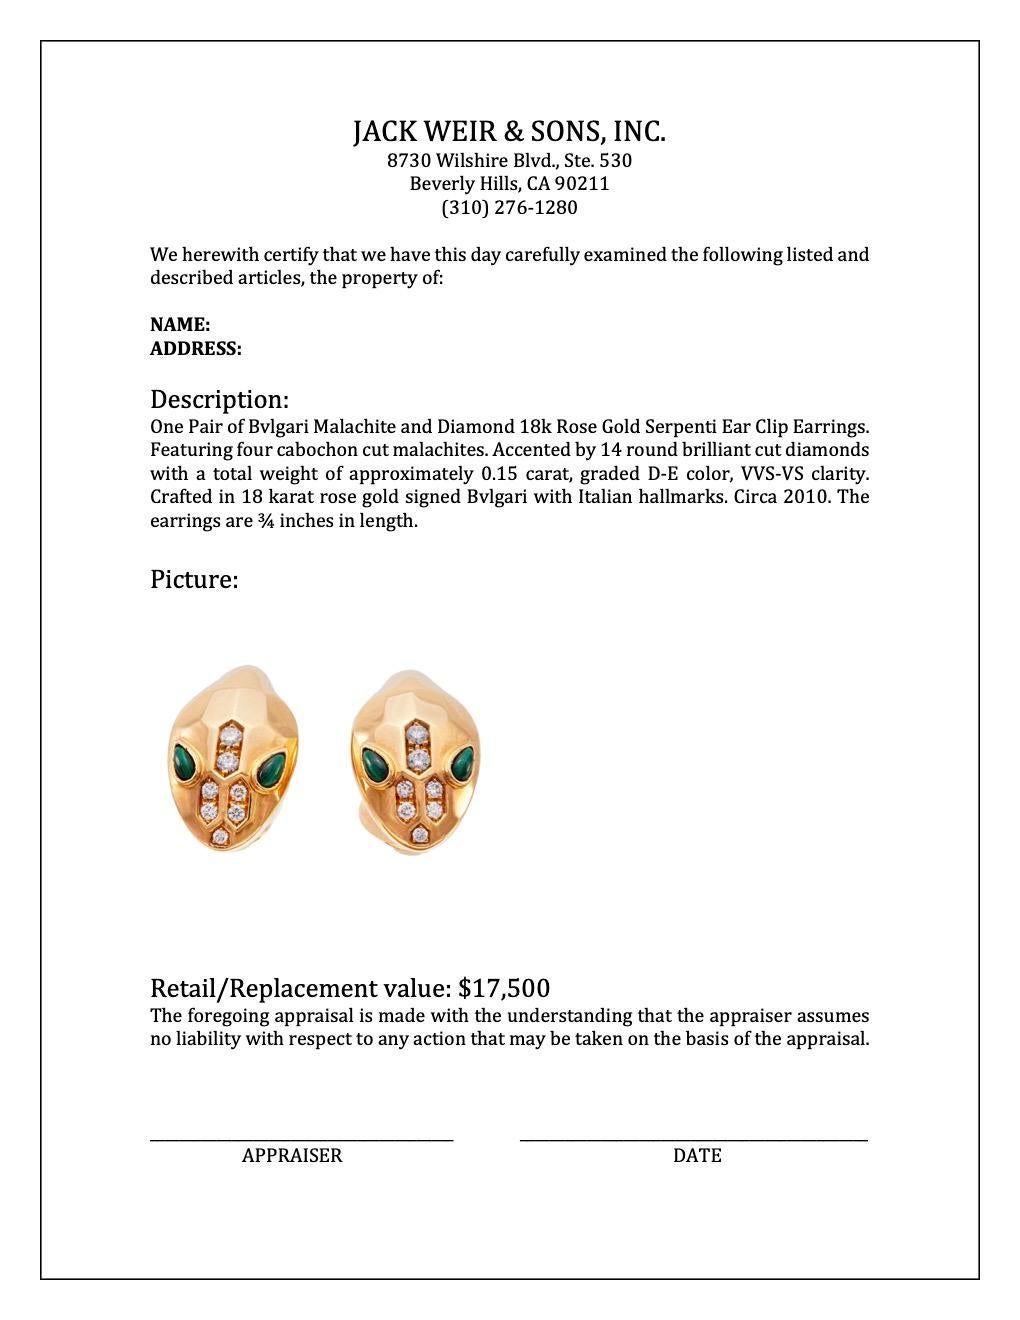 Cabochon Bvlgari Malachite and Dimond 18k Rose Gold Serpenti Ear Clip Earrings